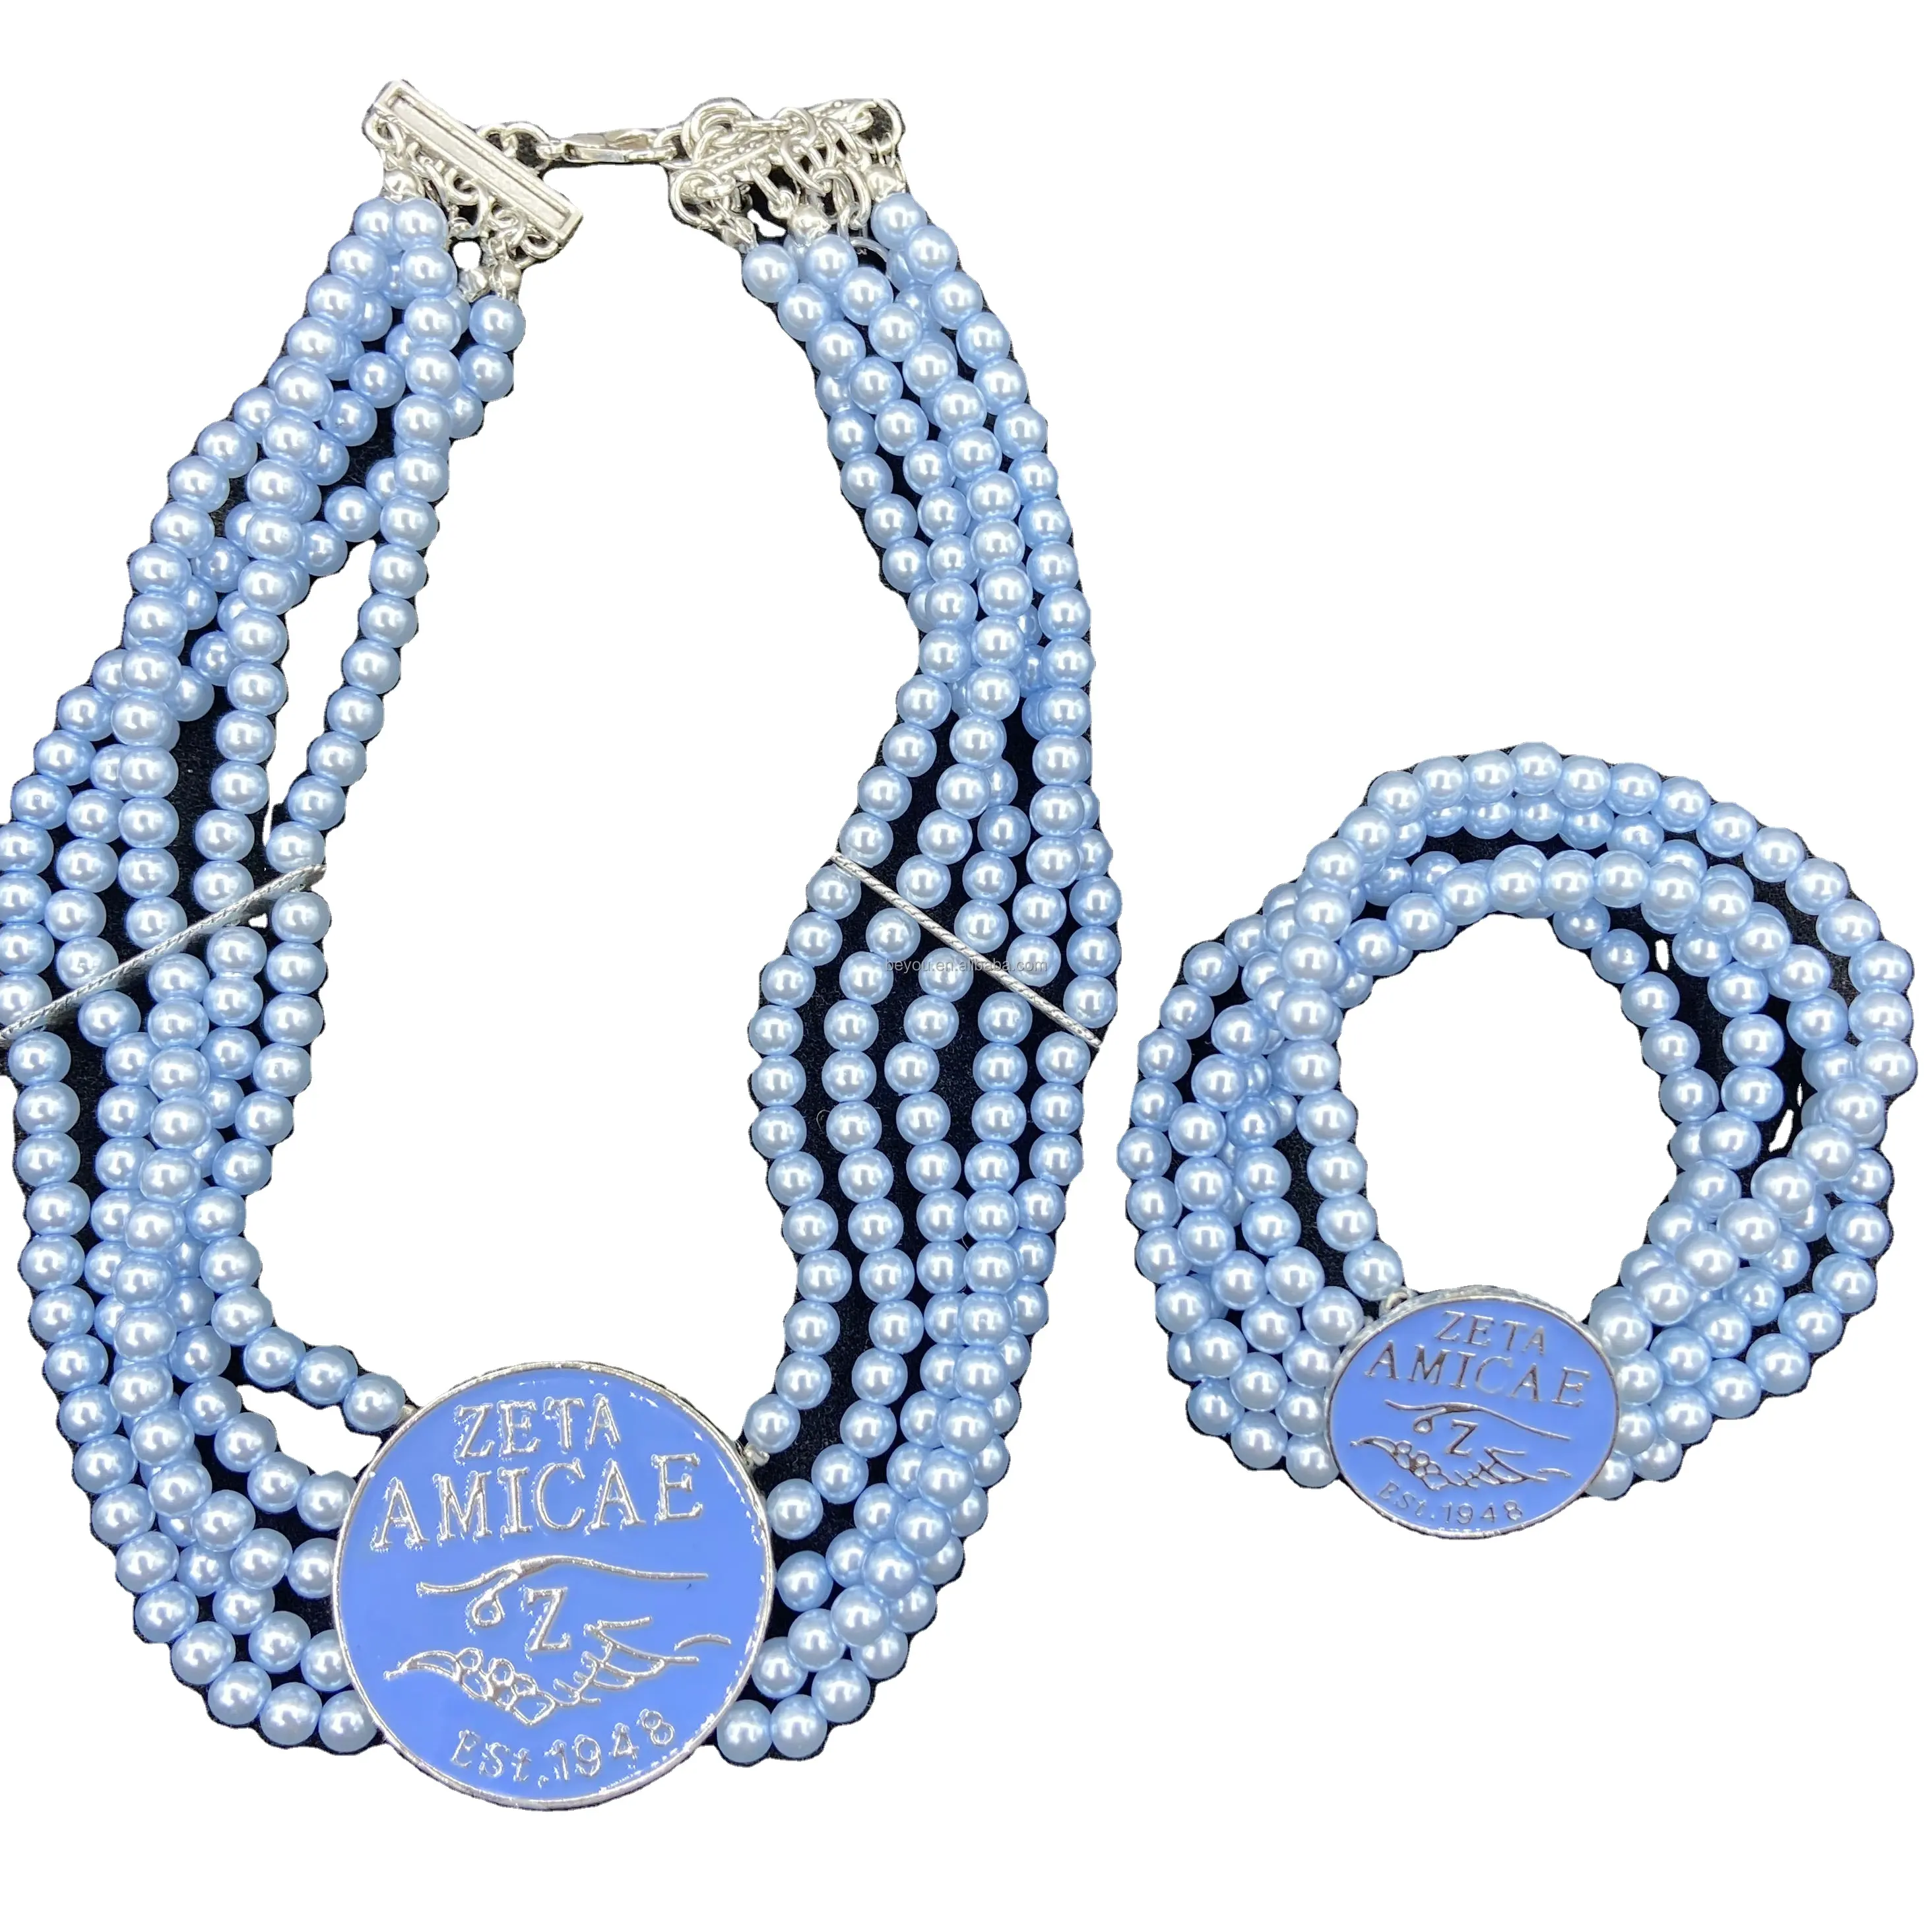 Mehrschicht-Schwarzbruderschaft hellblaue Perlen große Größe Zeta Amicae Emamel runder Anhänger-Kräuel Perlen-Halsband-Armbandsets